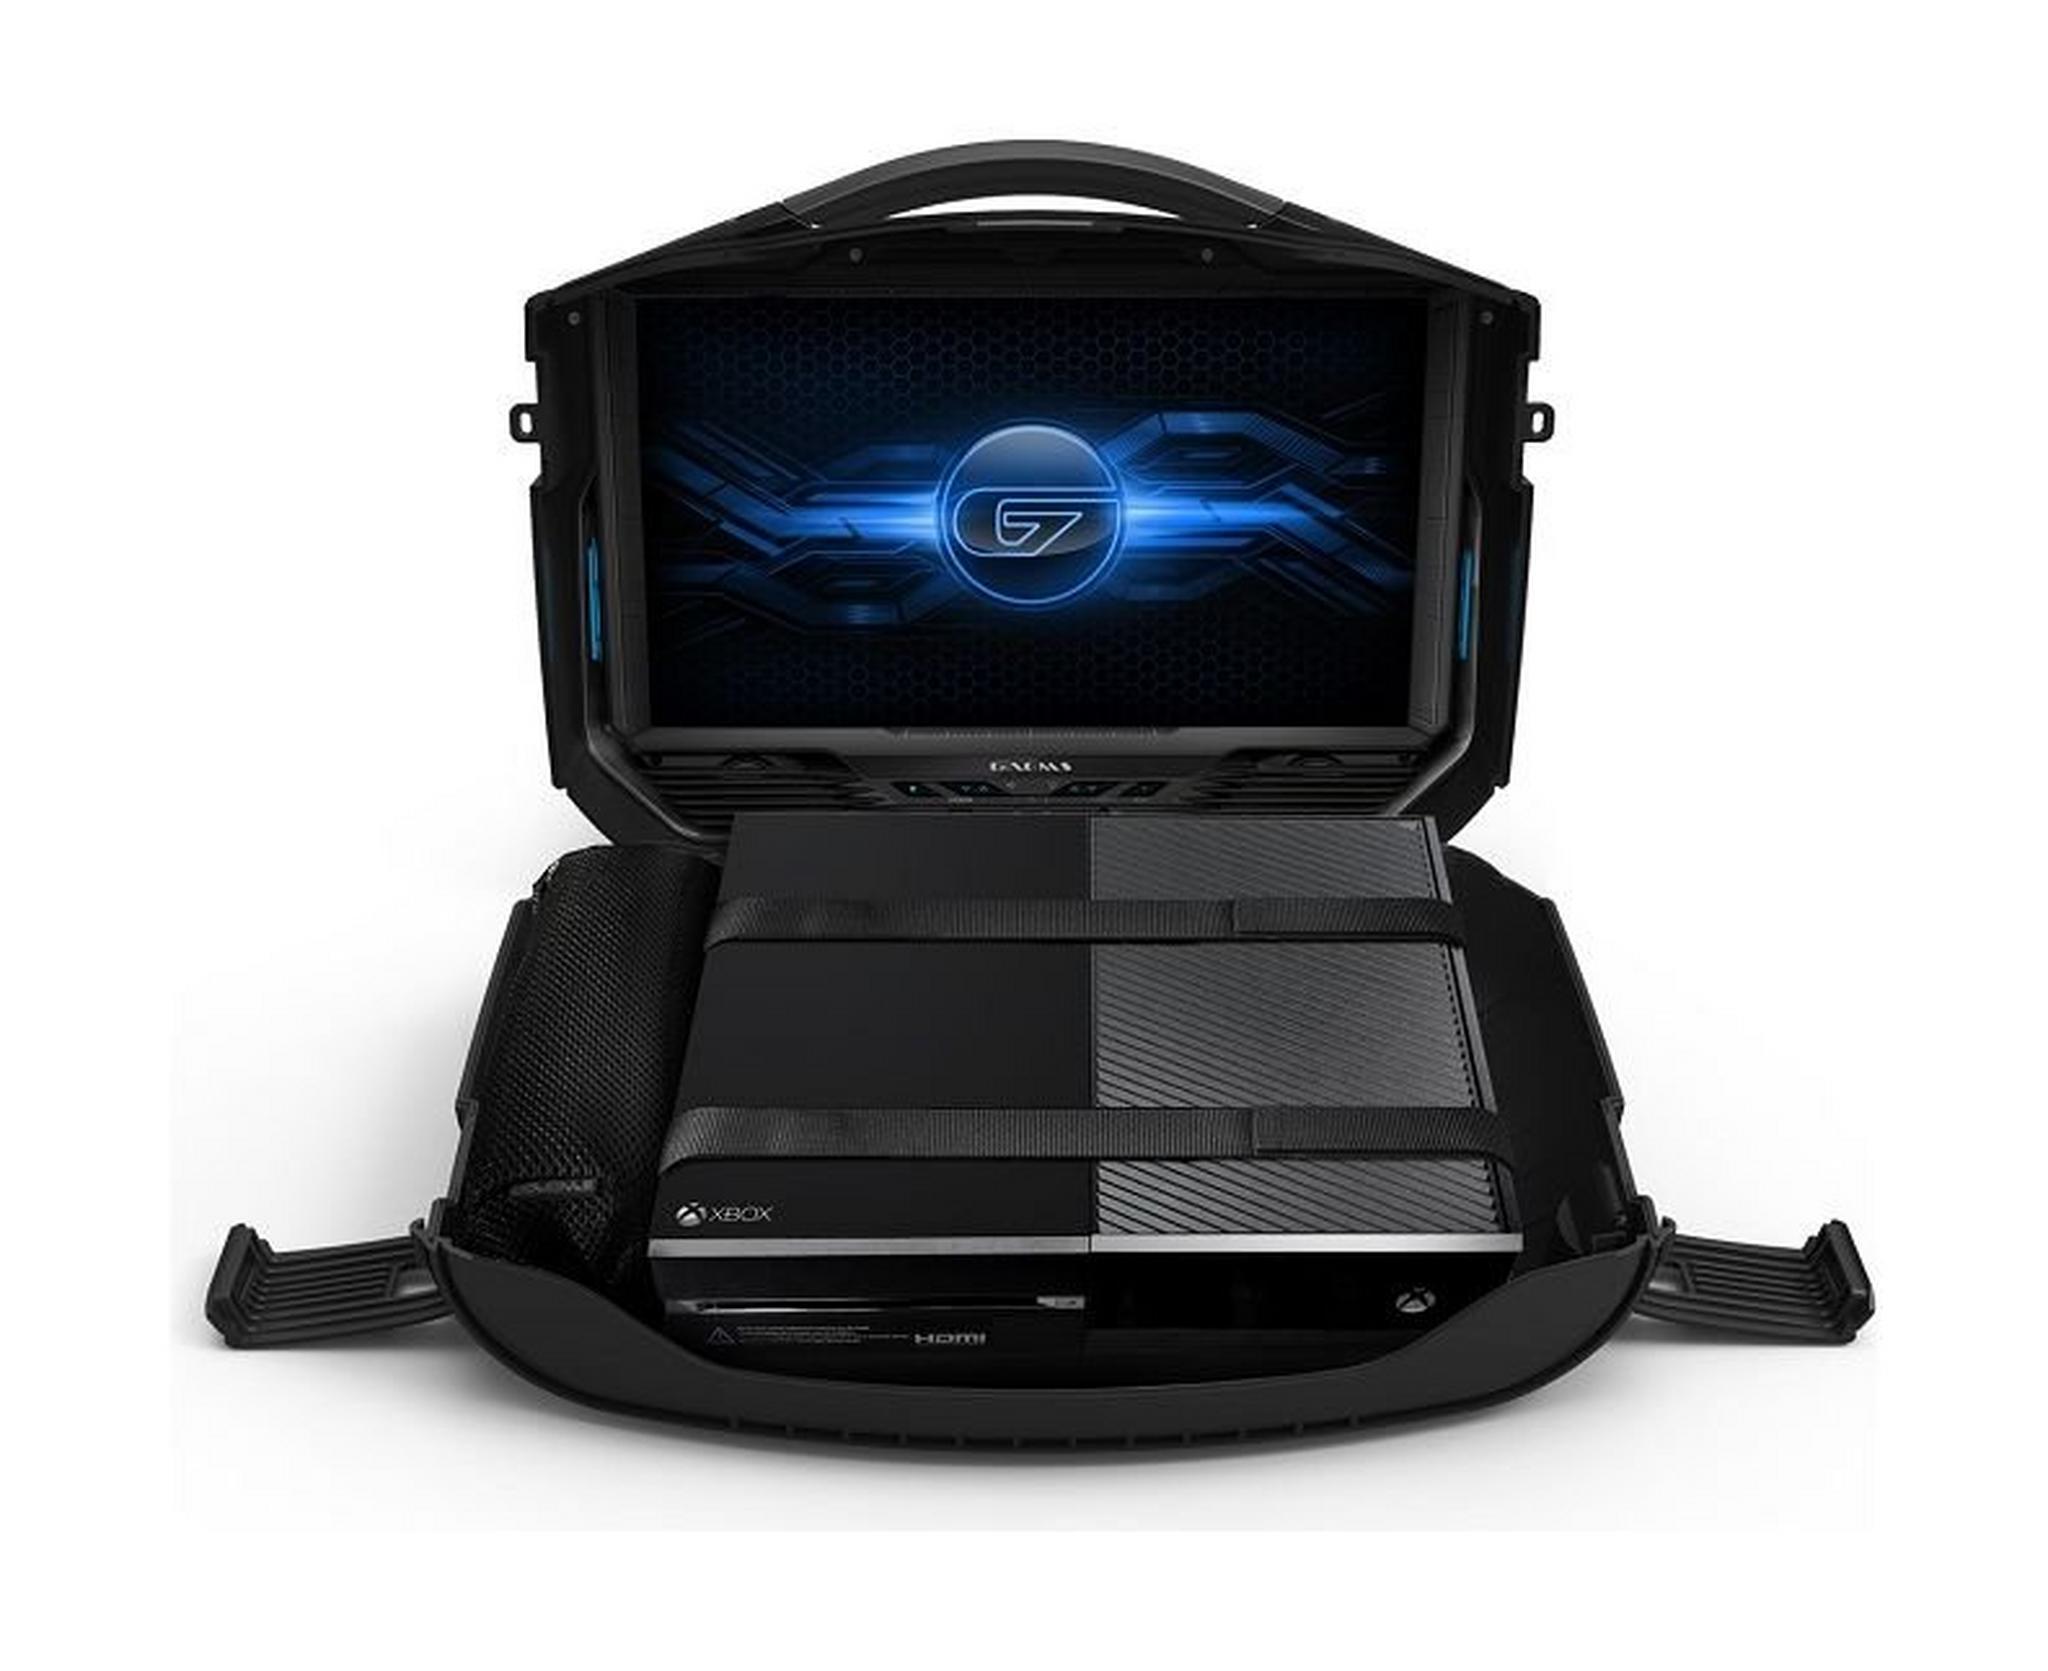 Gaems Vanguard Black Edition Bag With LED Display – 19-Inch